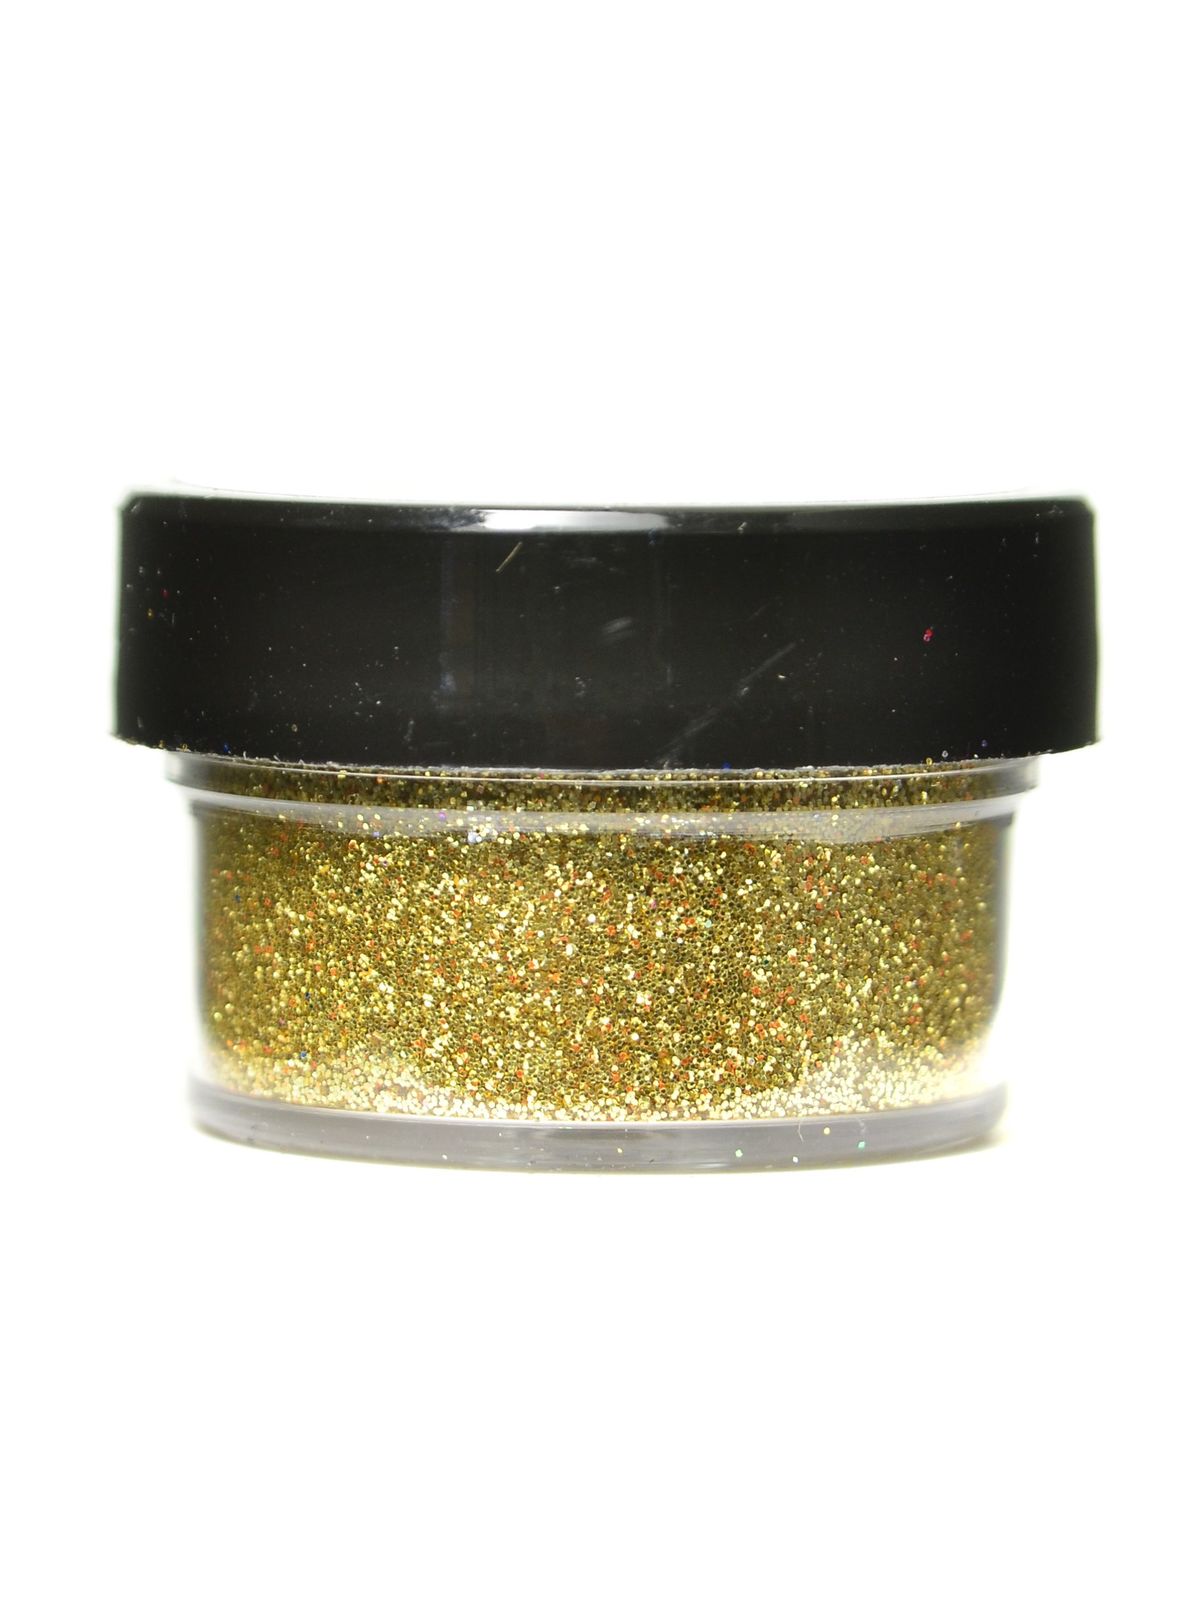 Ultrafine Opaque Glitter Yellow 1 2 Oz. Jar